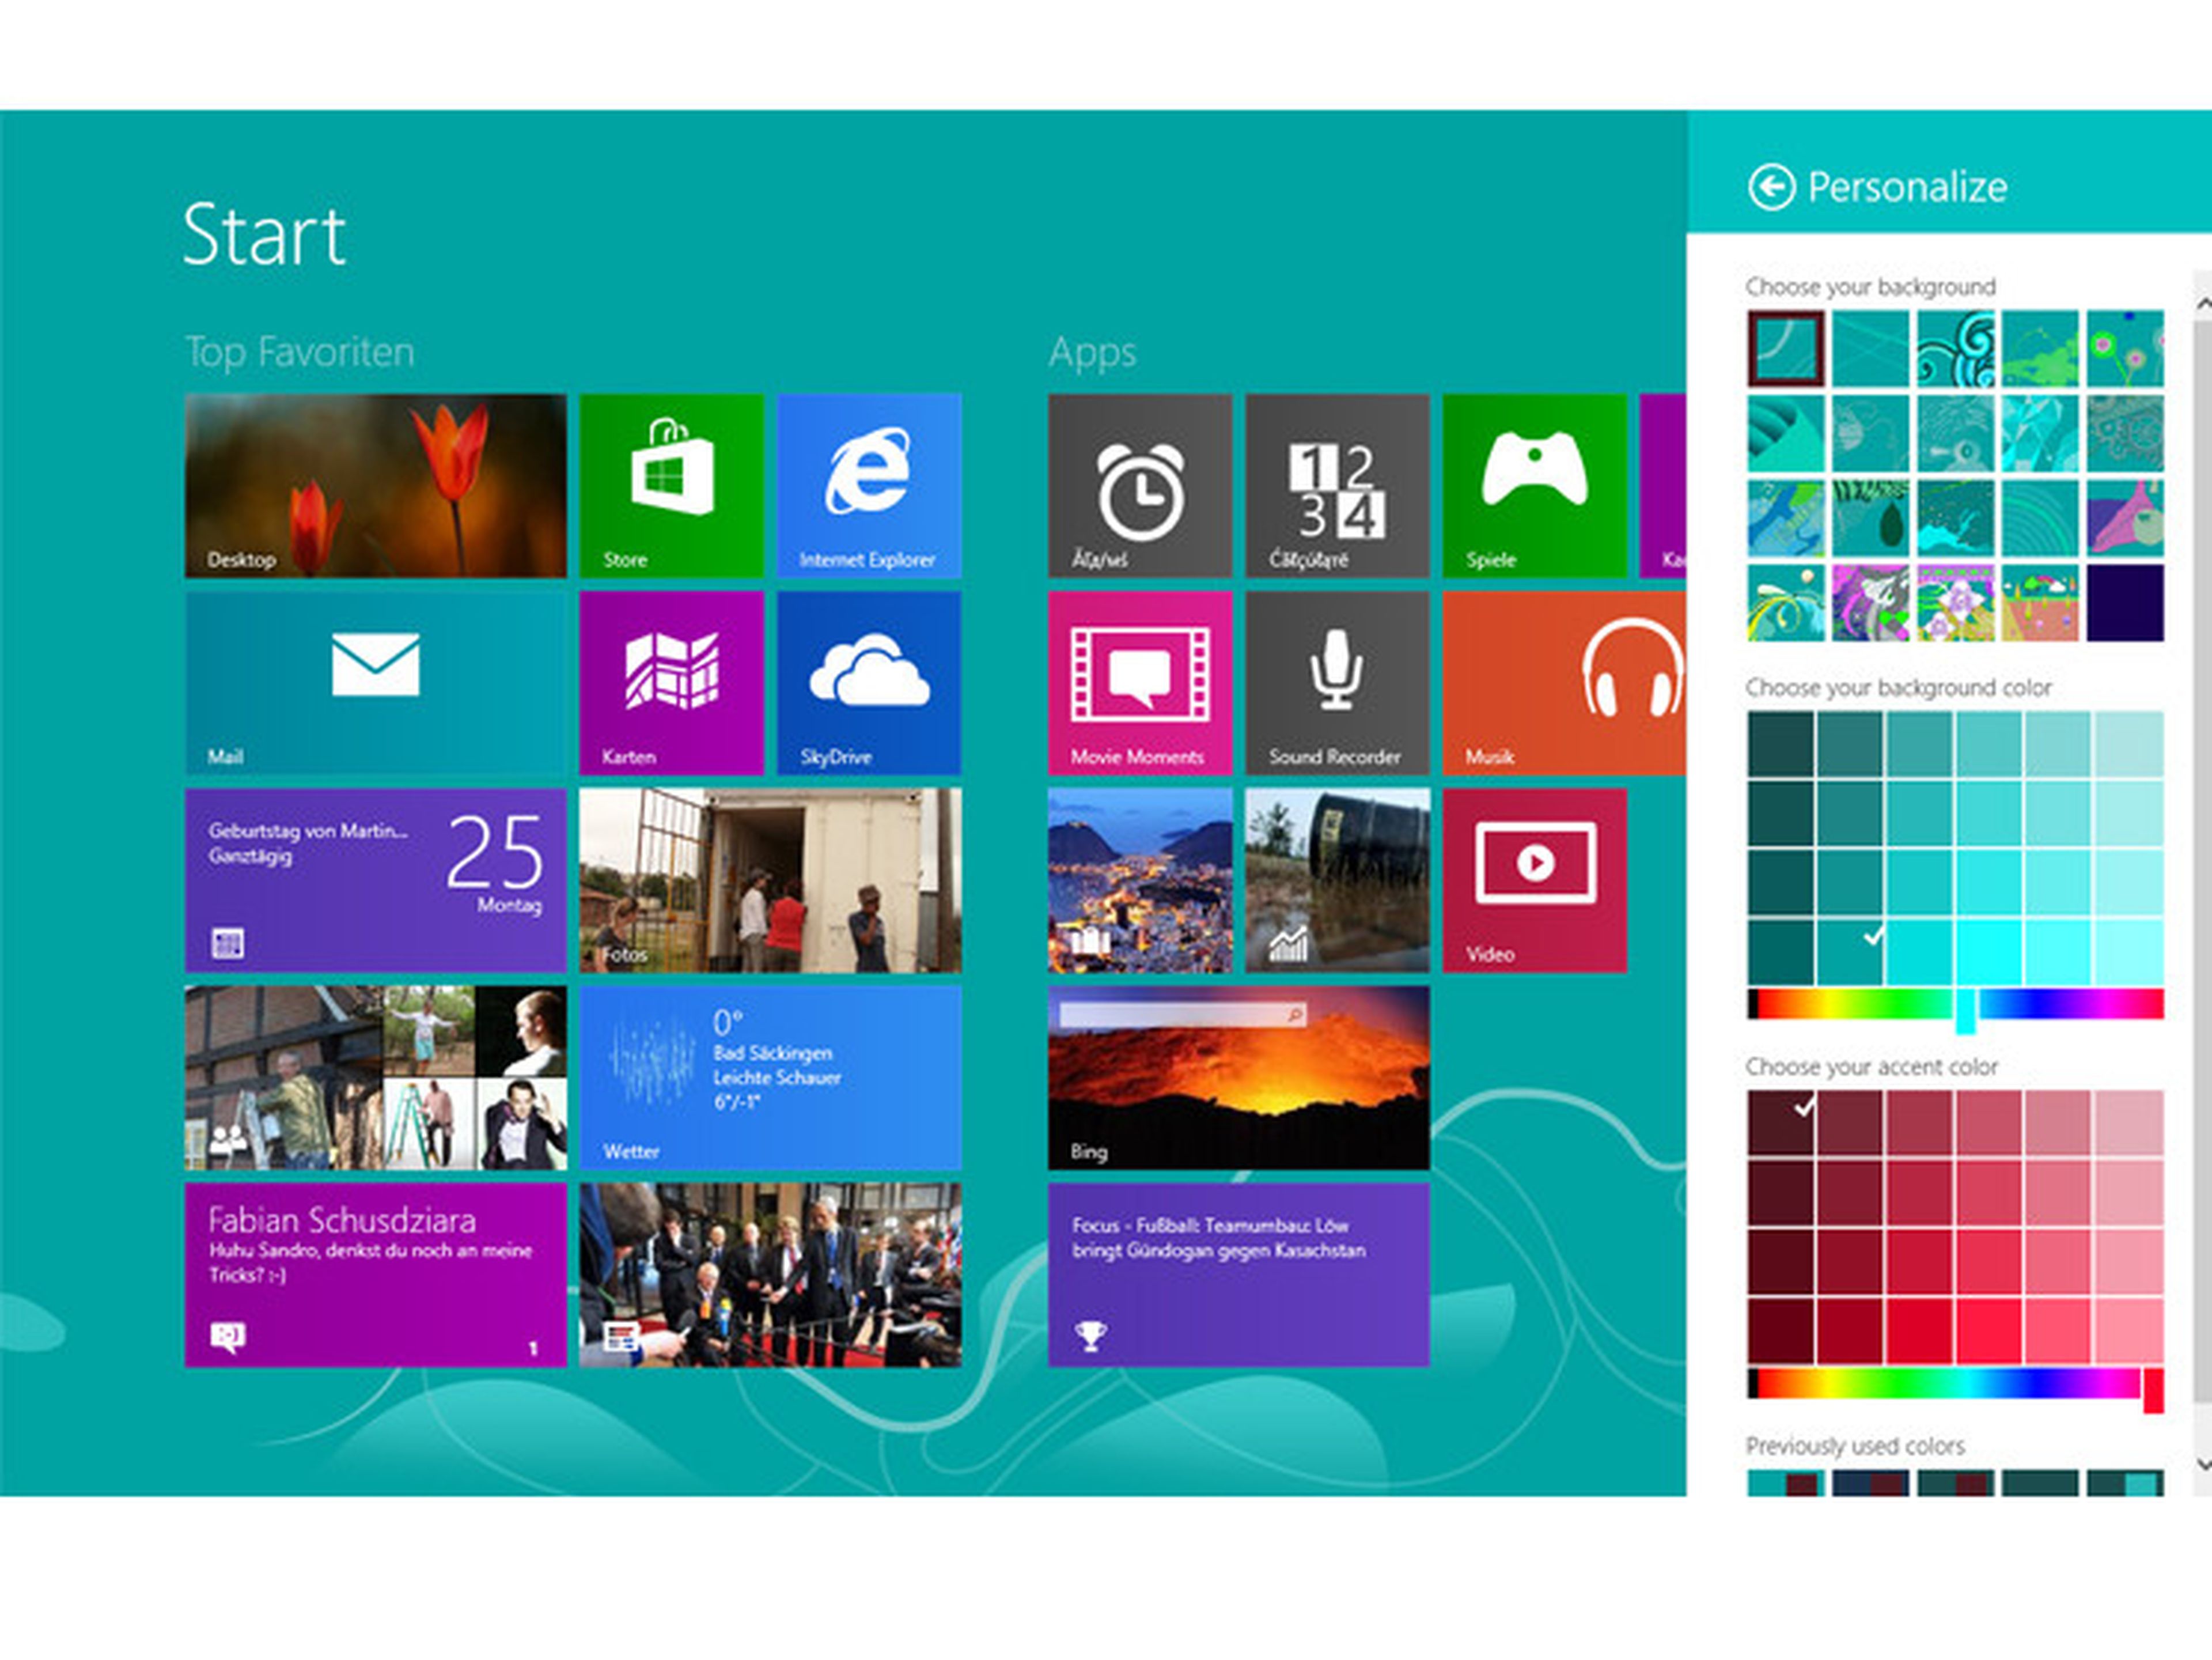 Windows 8.1 interfaz de inicio